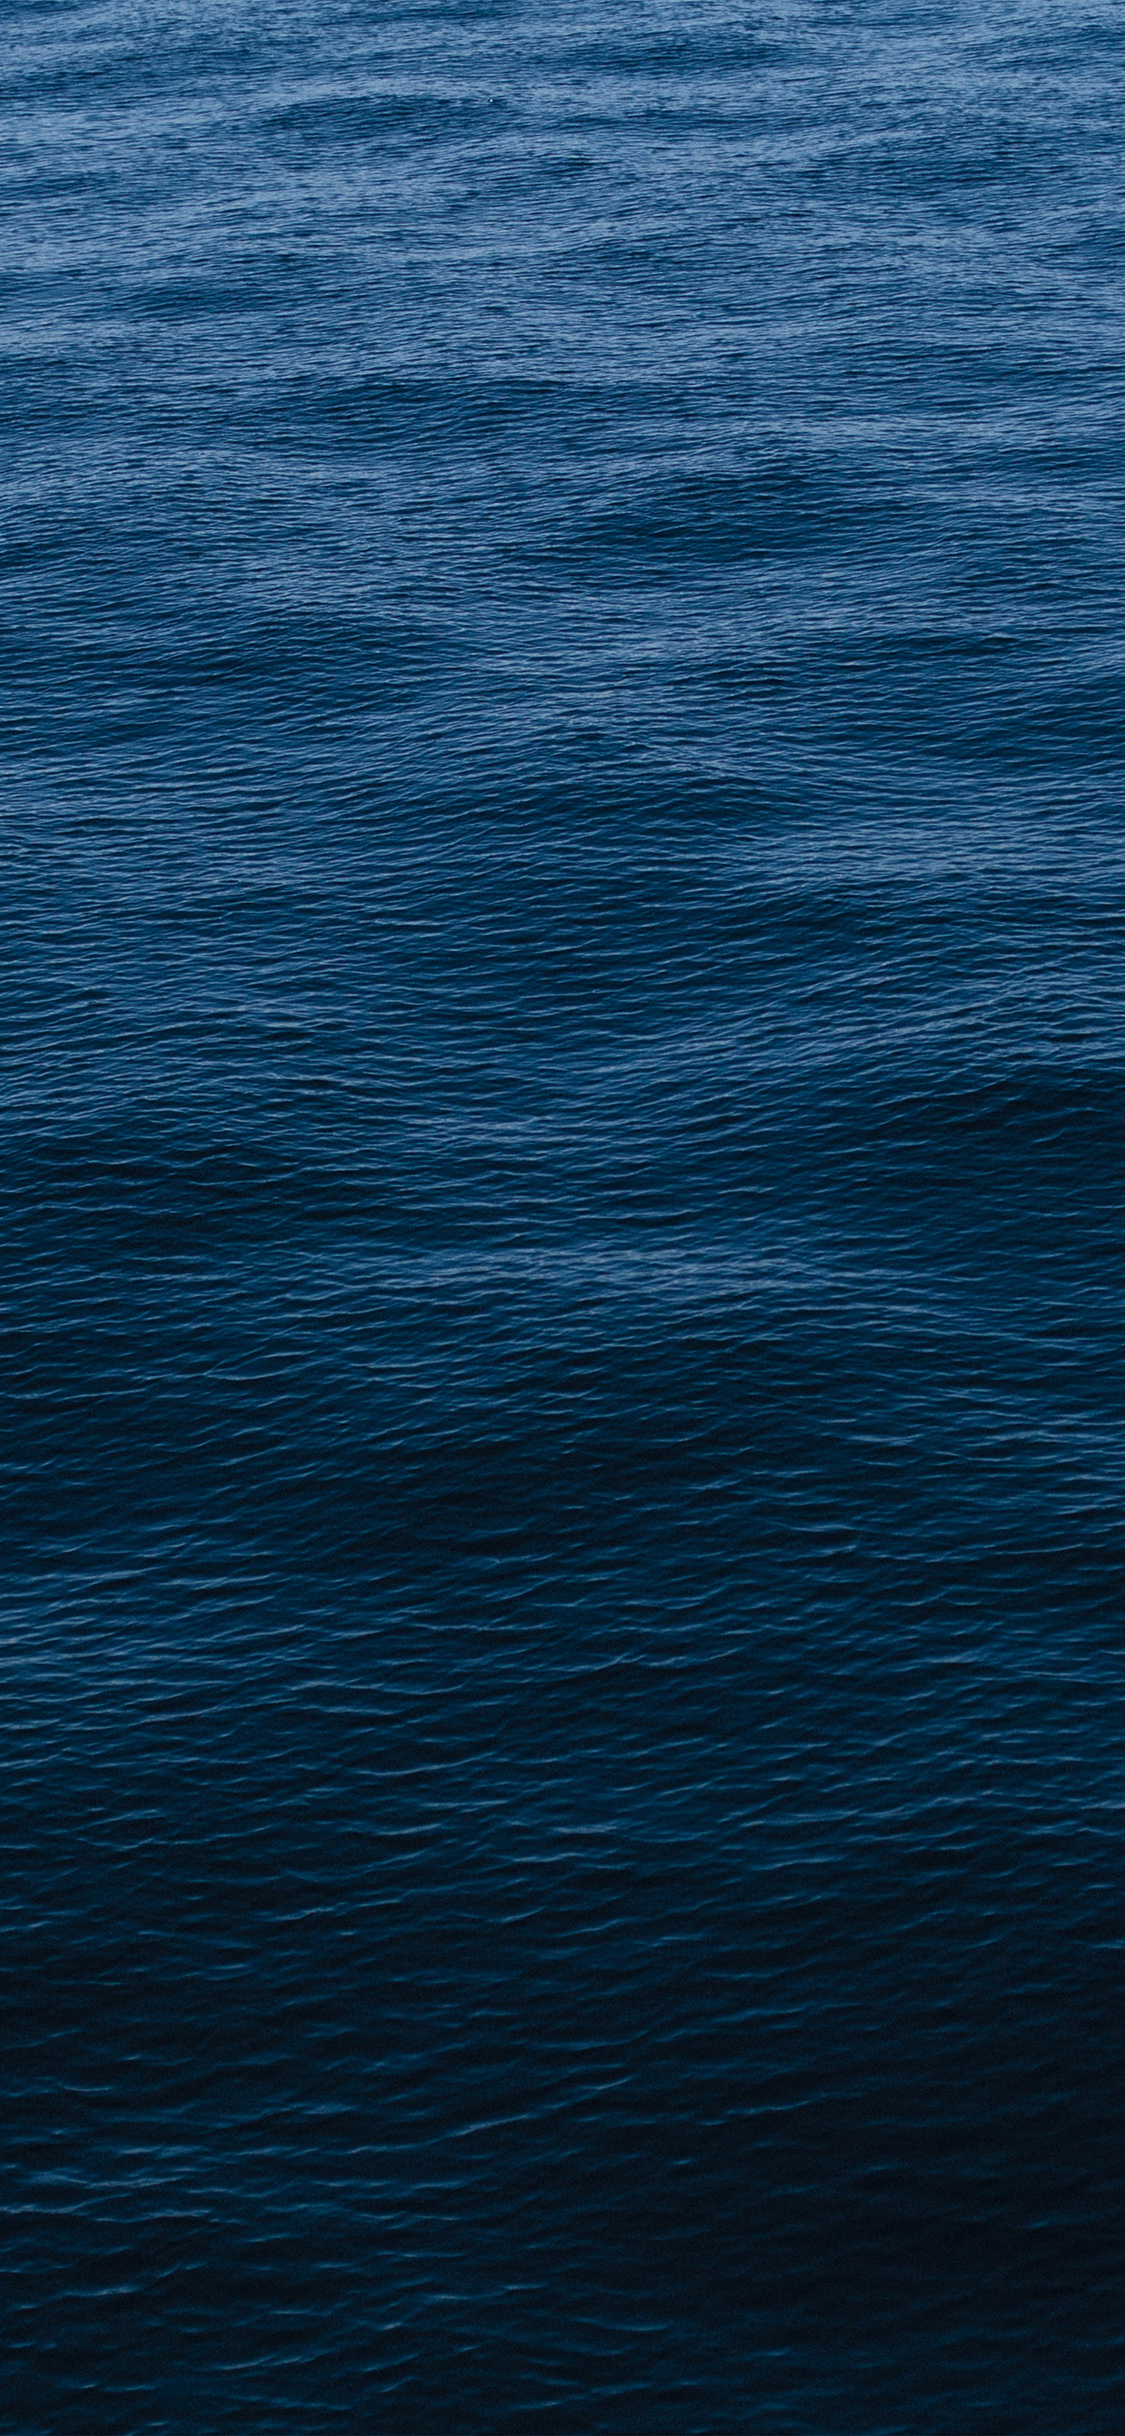 iPhone X wallpaper. wave dark ocean sea blue pattern